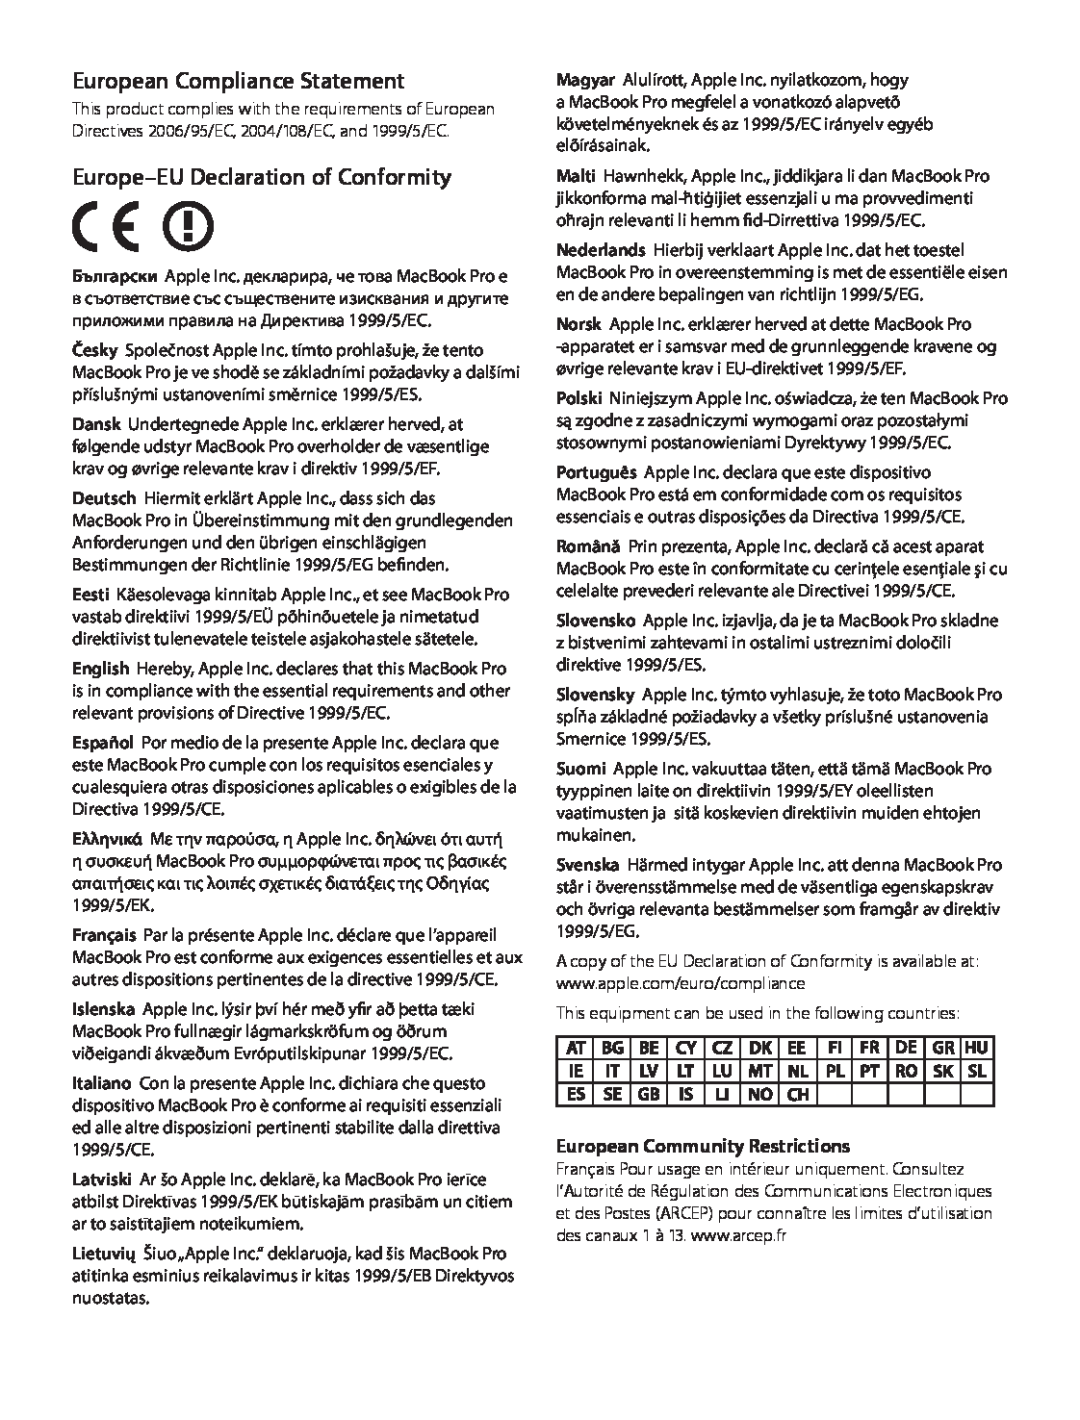 Apple MD103LL/A manual European Compliance Statement, Europe-EU Declaration of Conformity, European Community Restrictions 